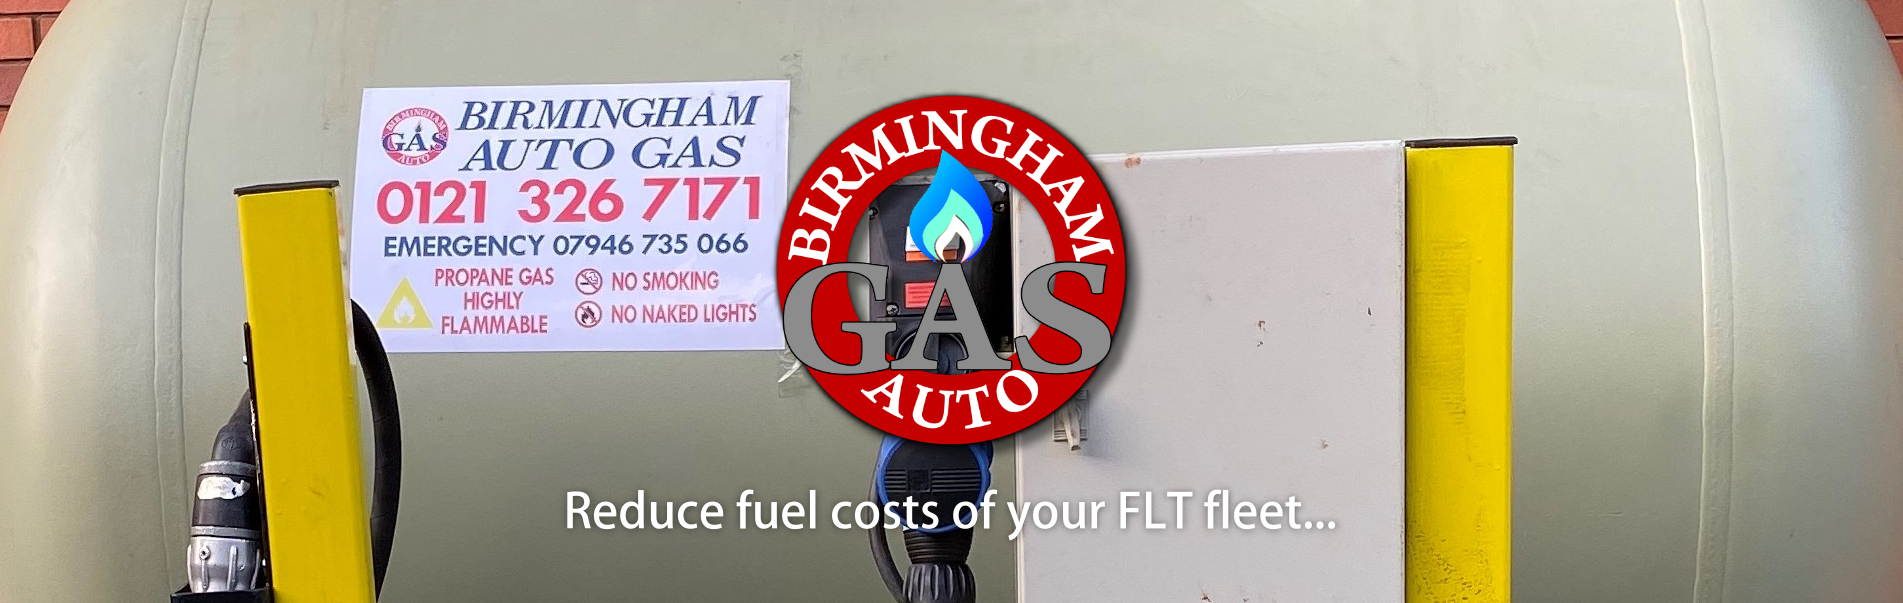 Birmingham Autogas